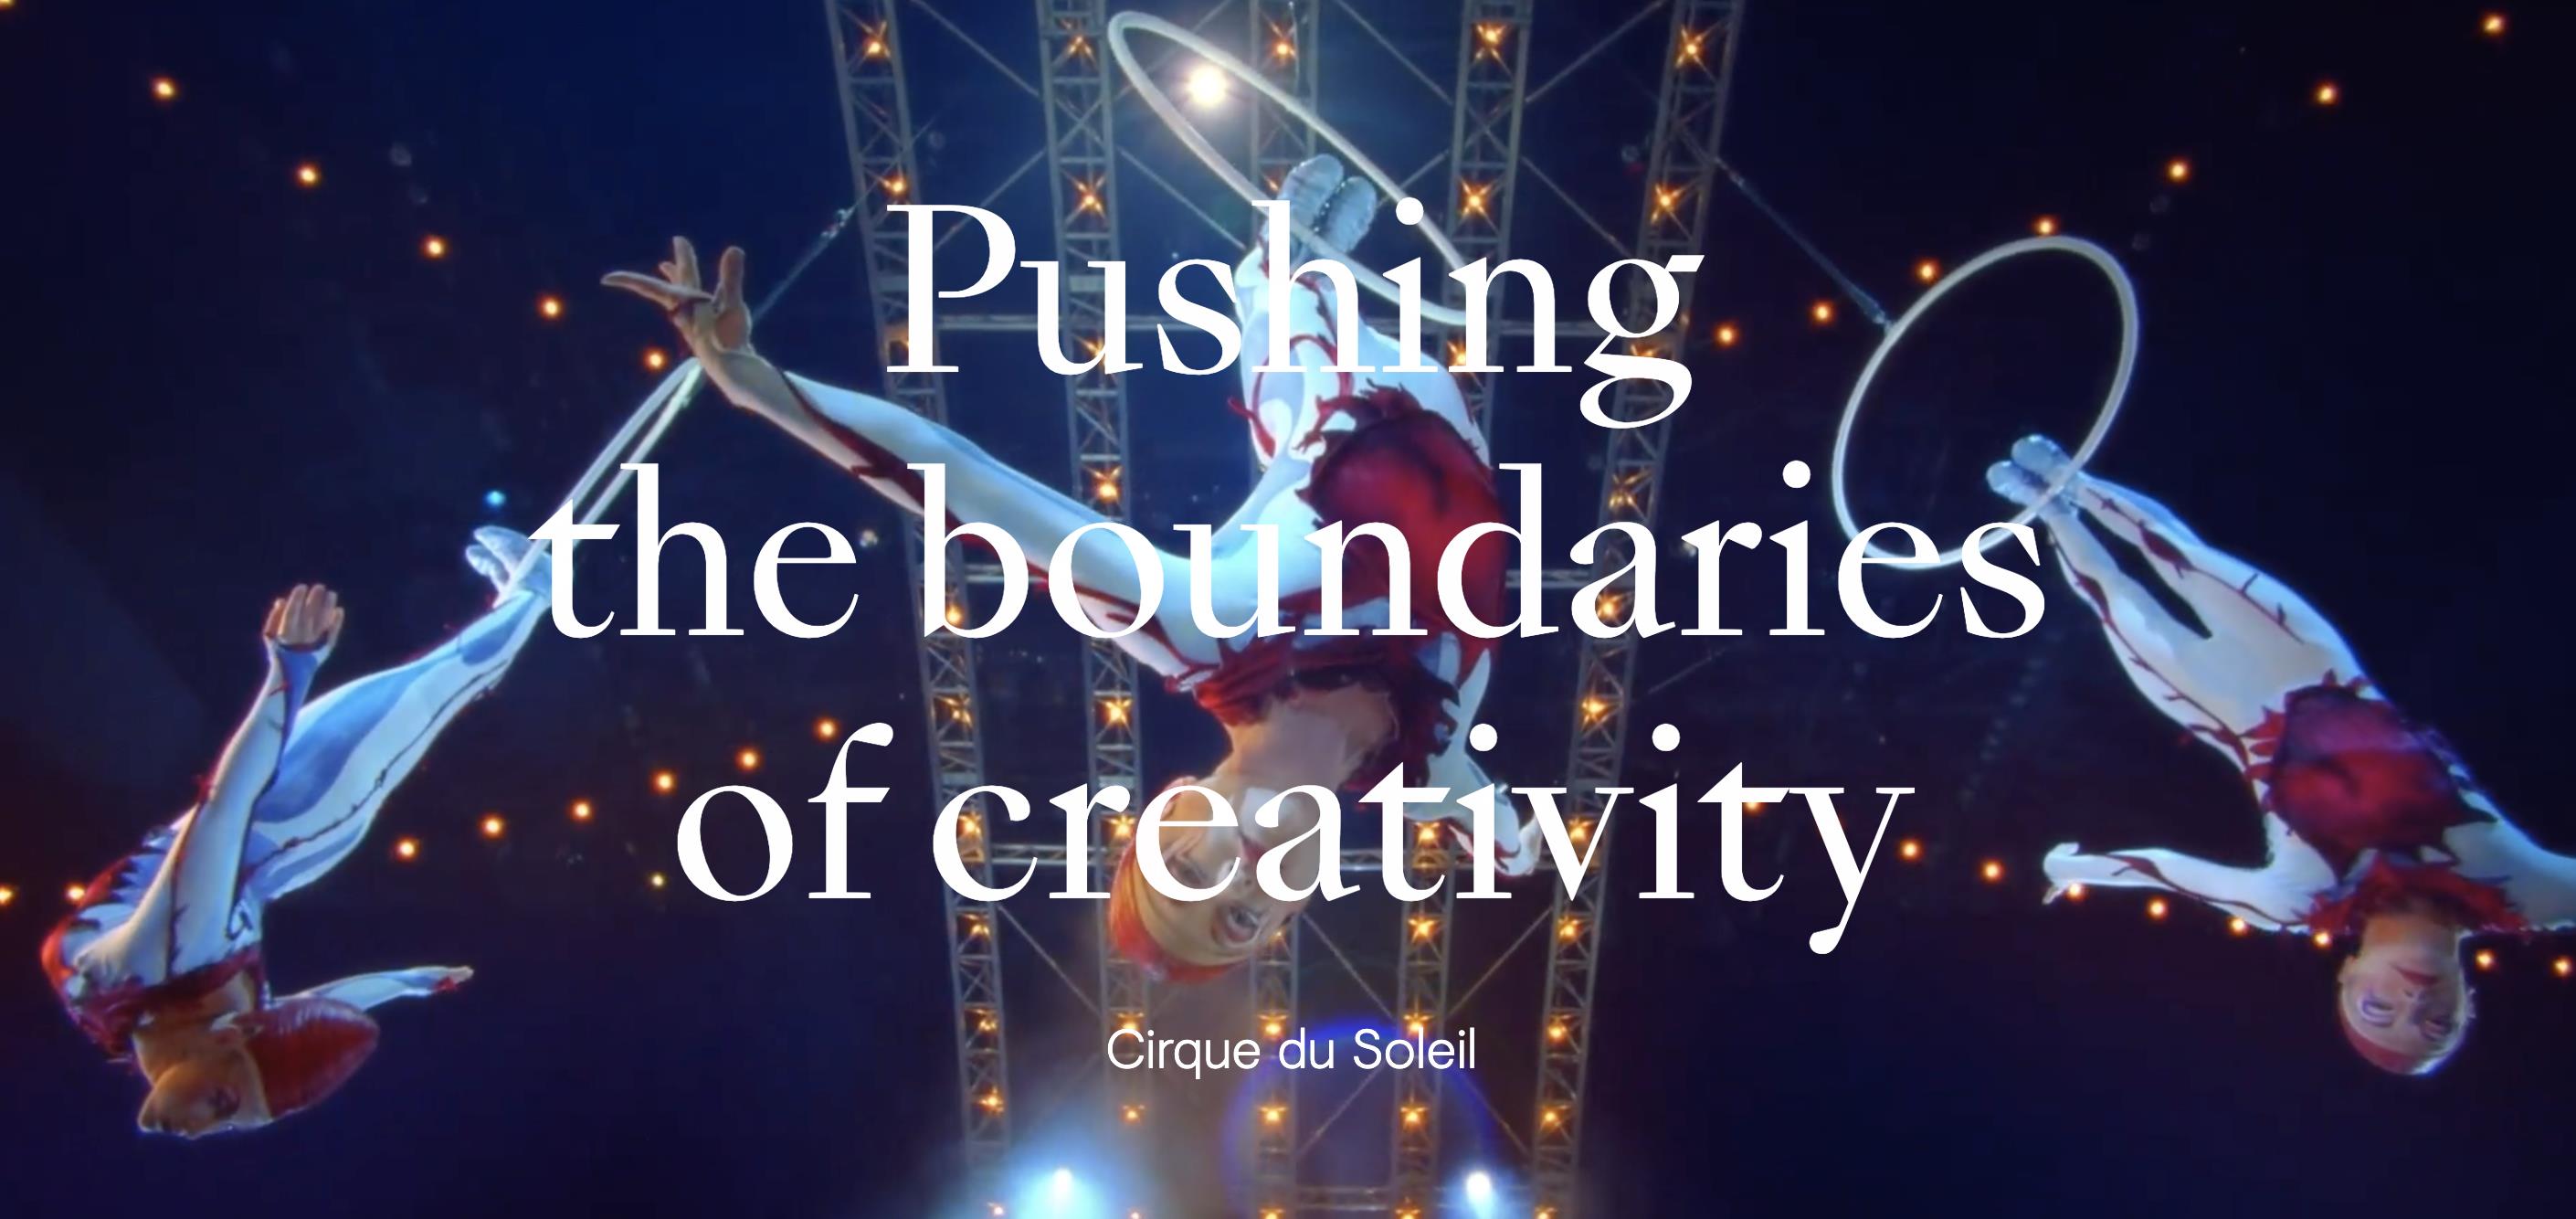 Cirque du Soleil - Pushing the boundaries of creativity